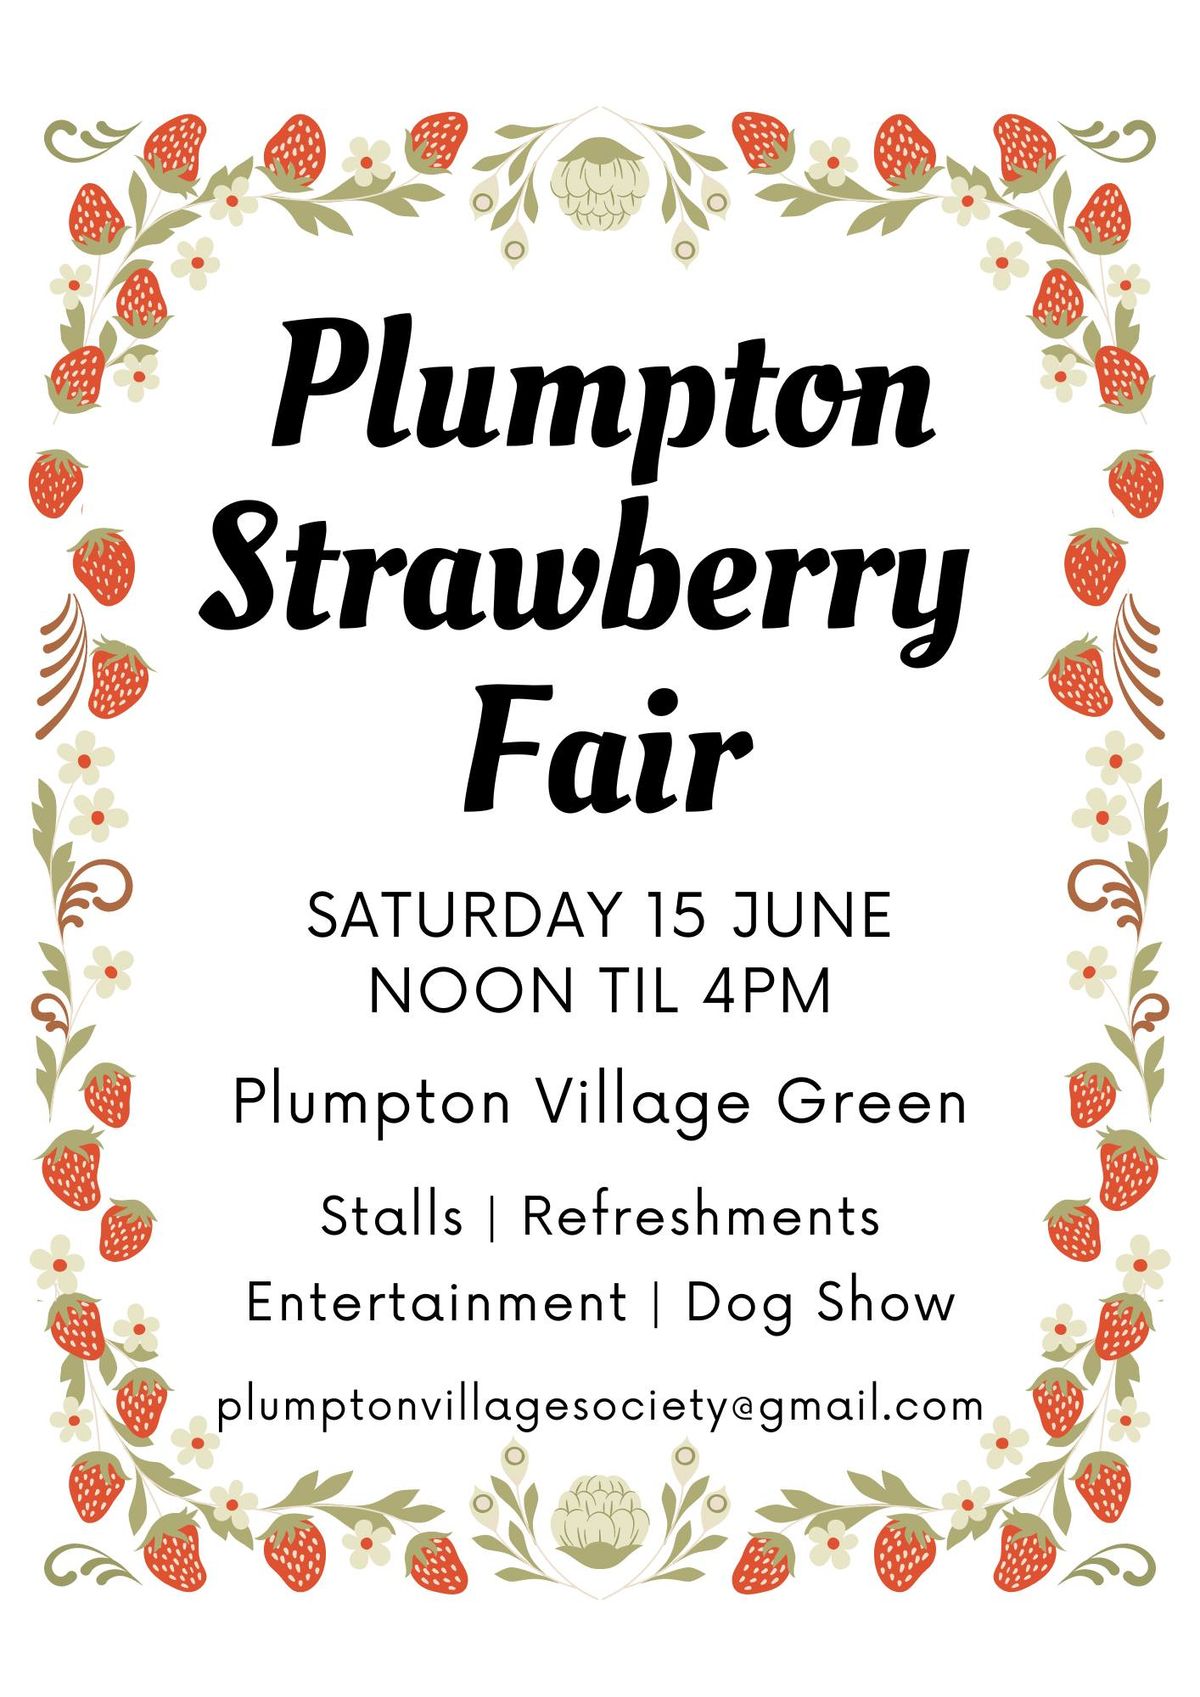 Plumpton Strawberry Fair